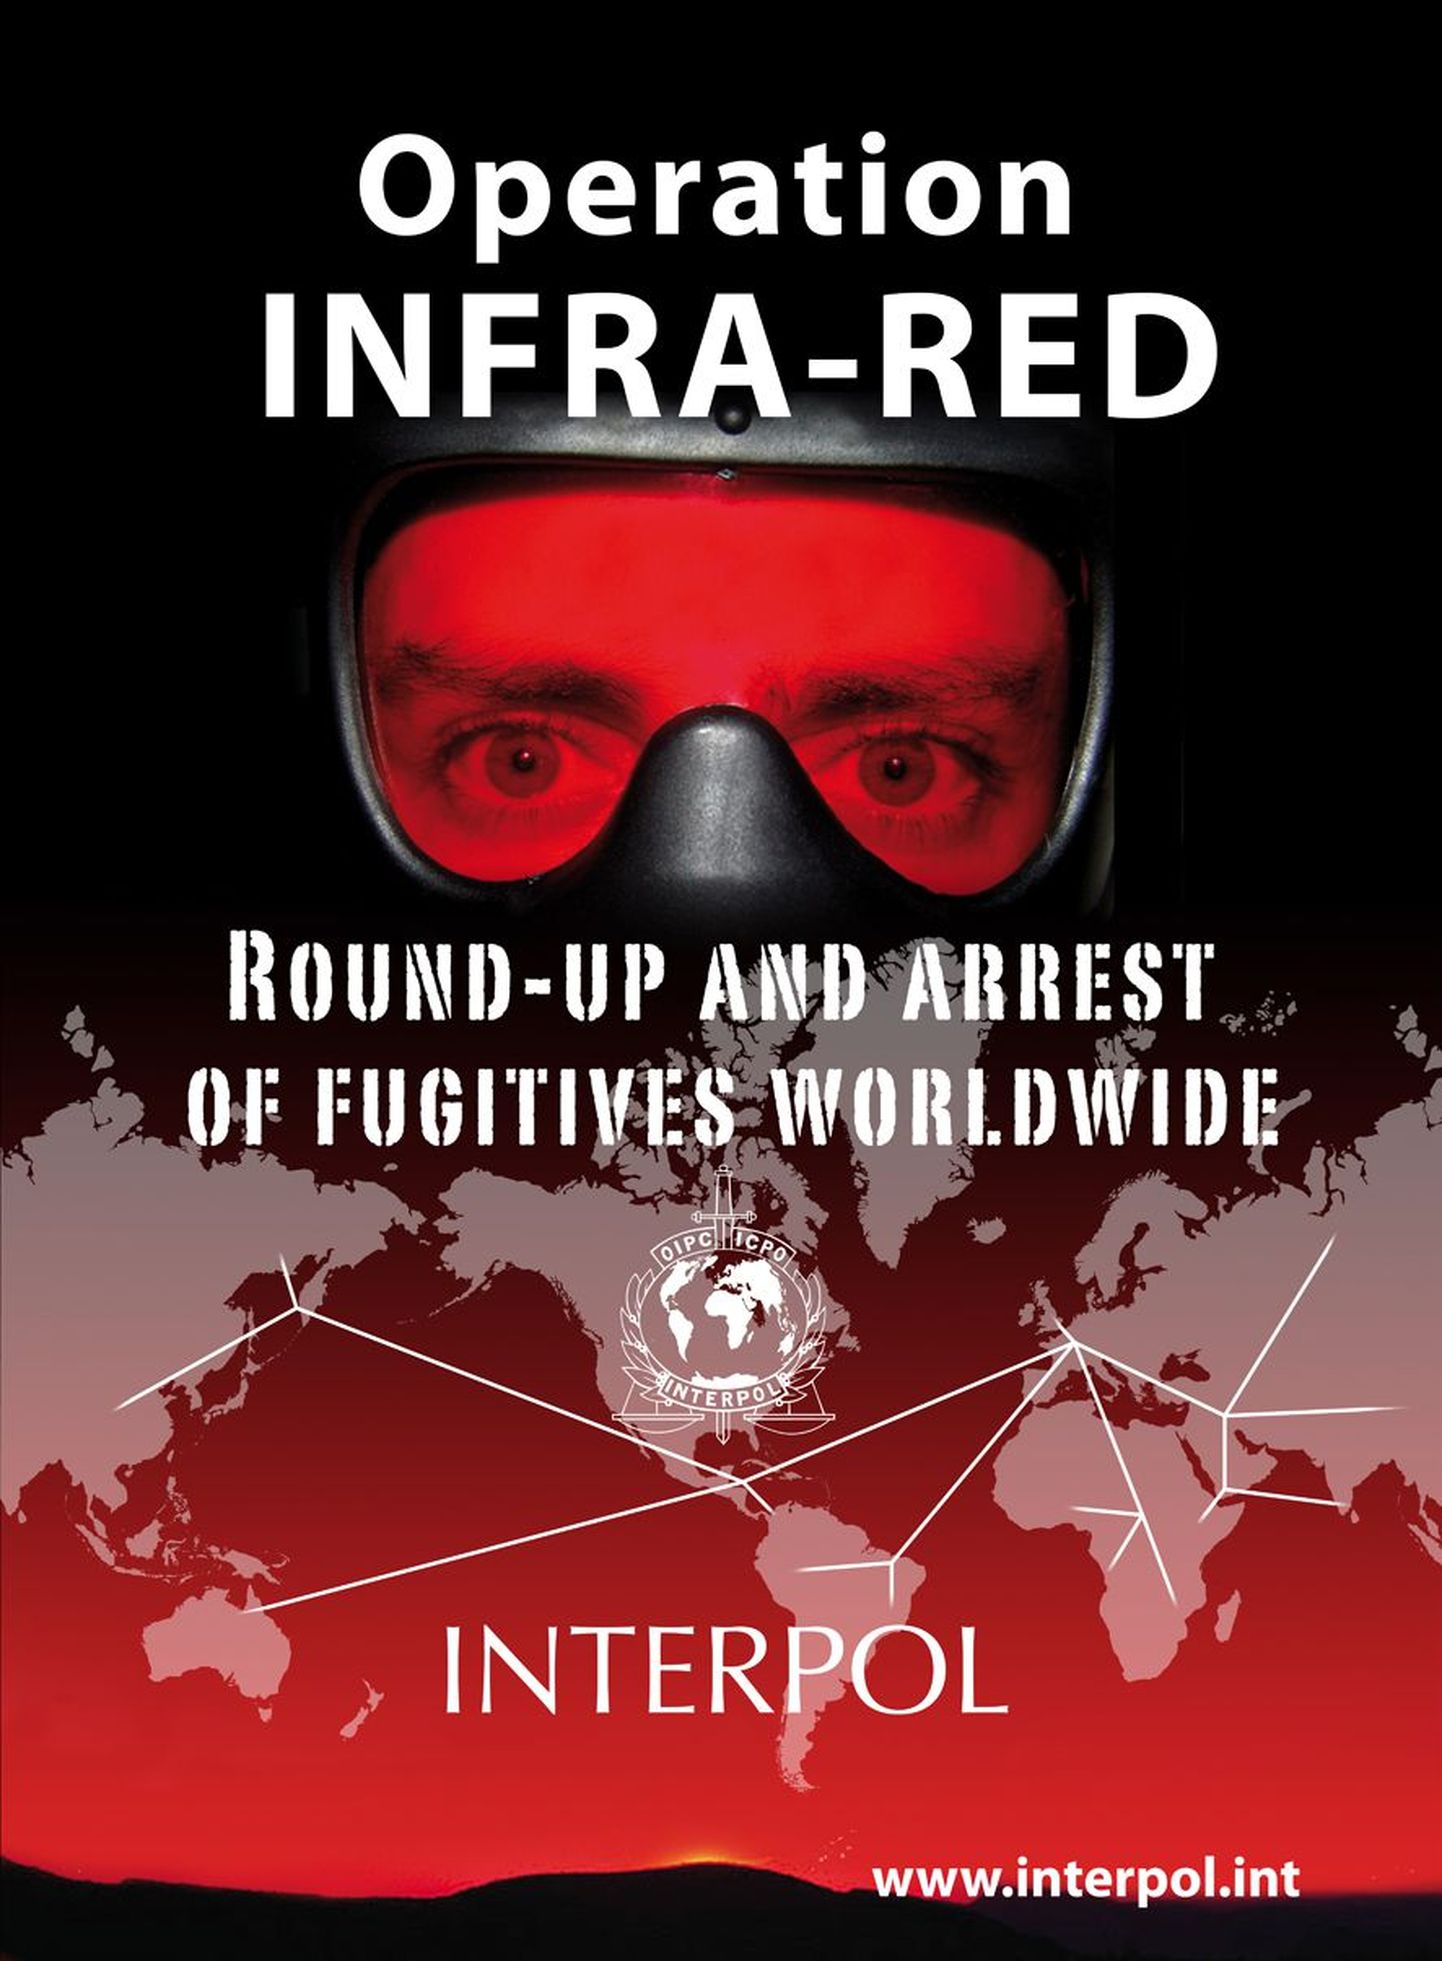 Operatsiooni Infra-Red plakat.